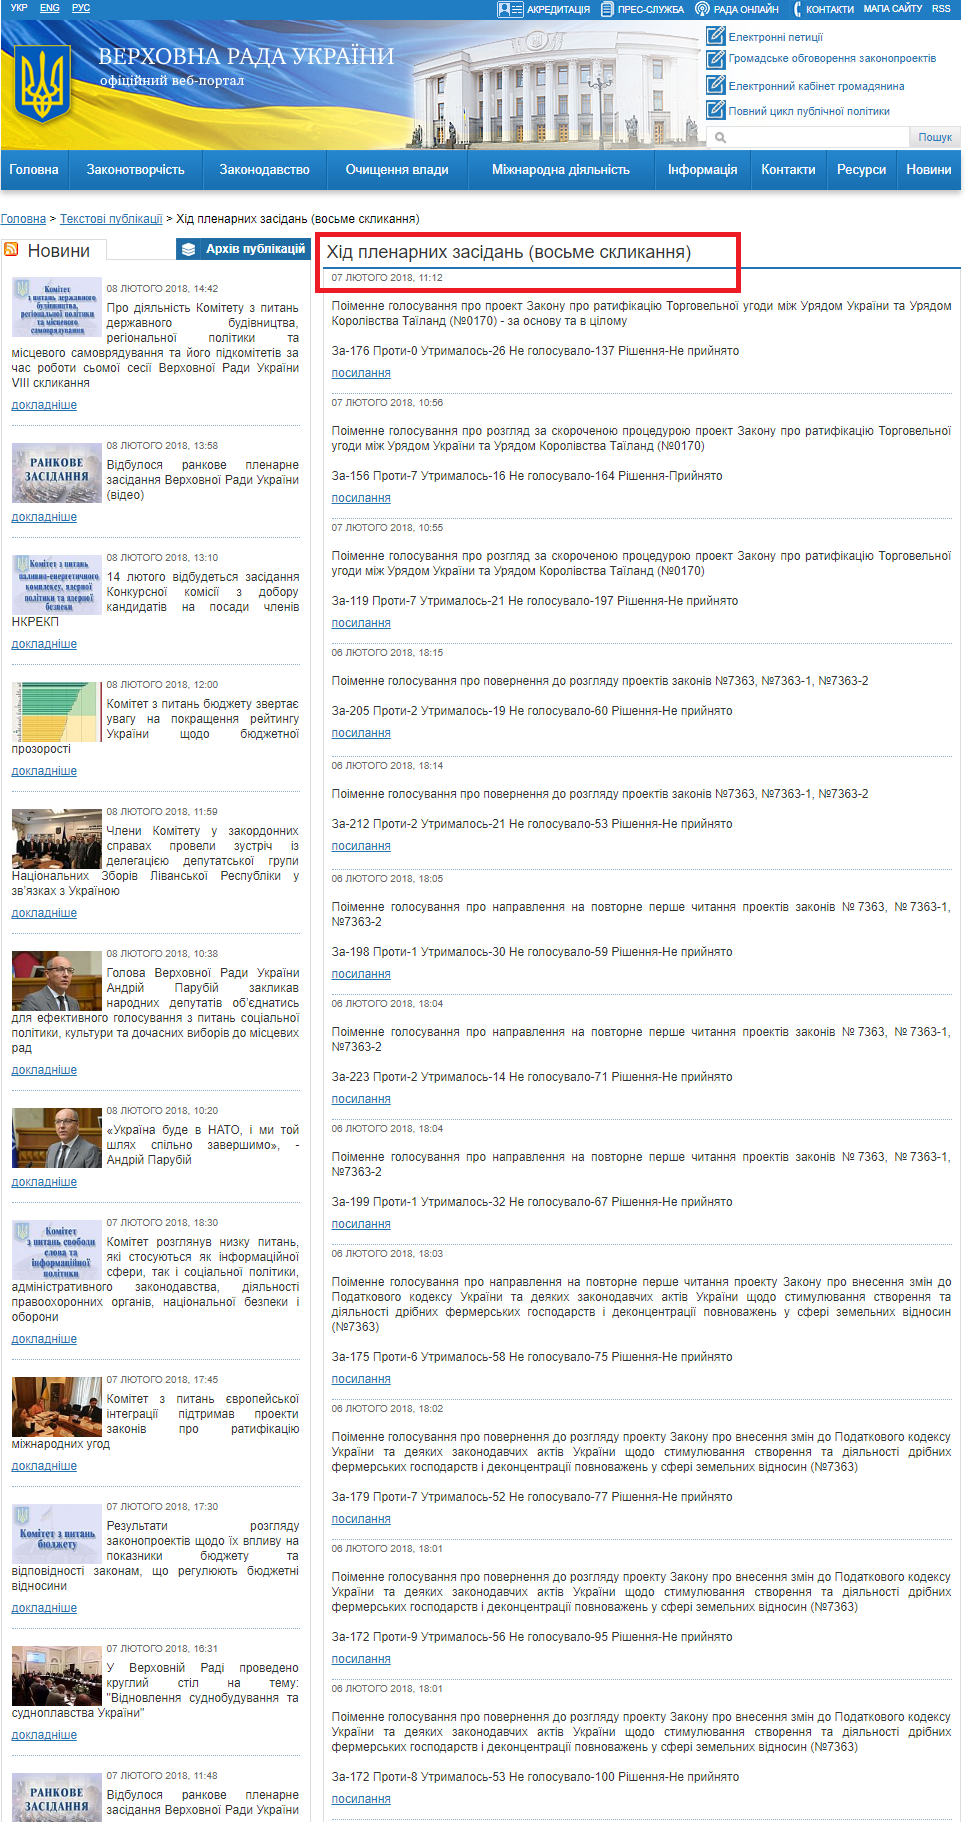 http://iportal.rada.gov.ua/news/hpz8/page/4